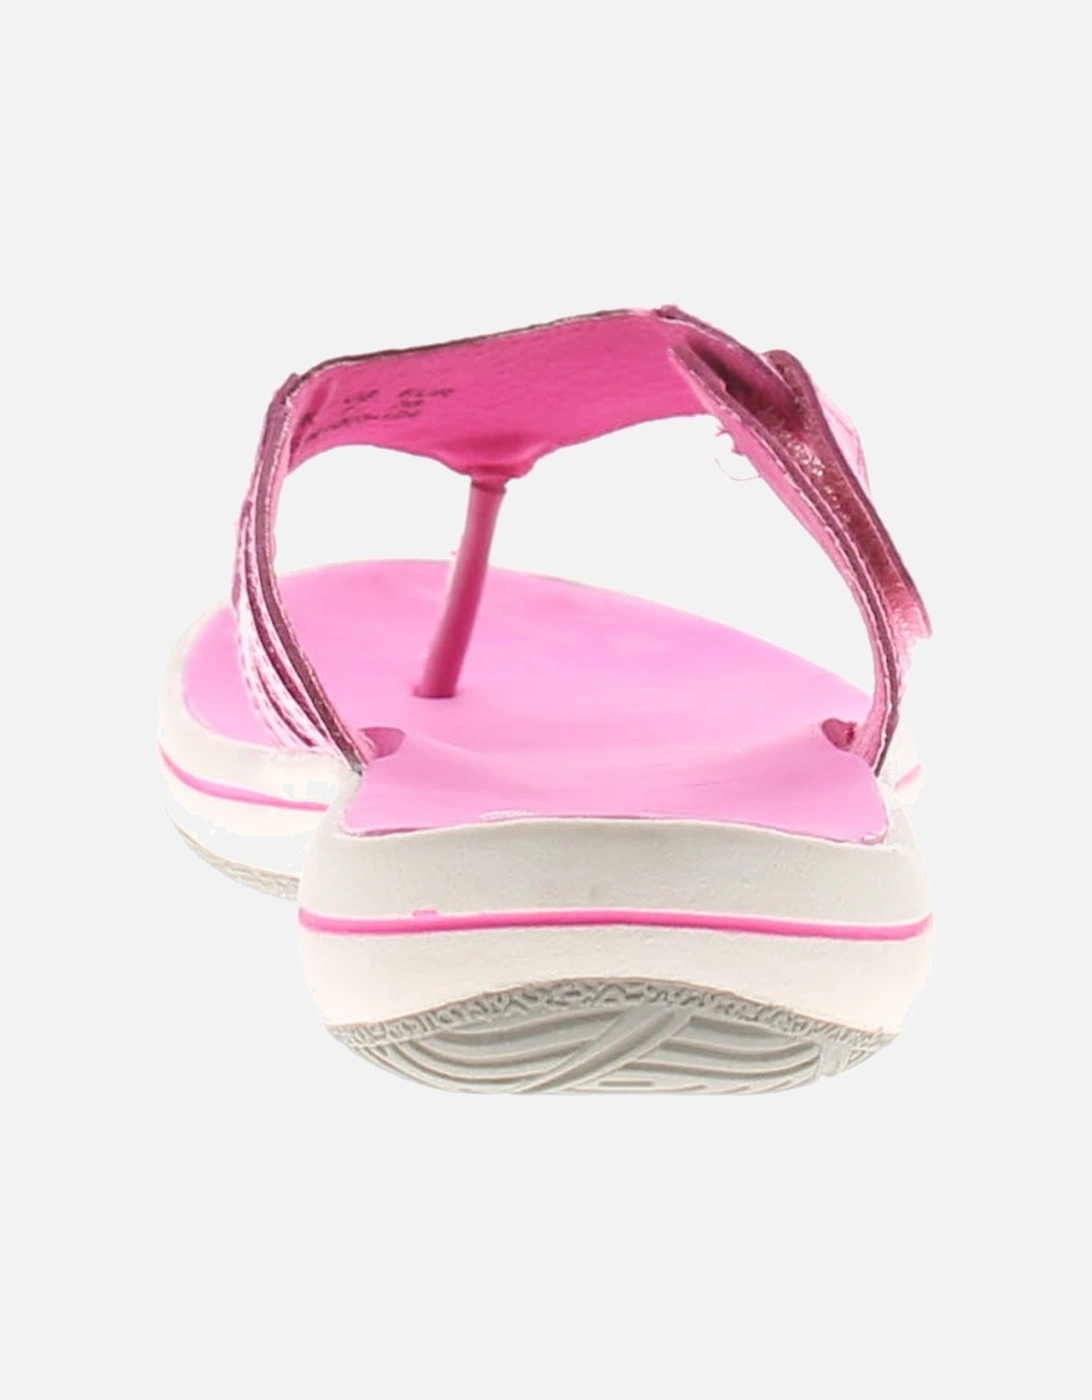 Free Spirit Womens Sandals Flip Flops Kelly Slip On pink UK Size